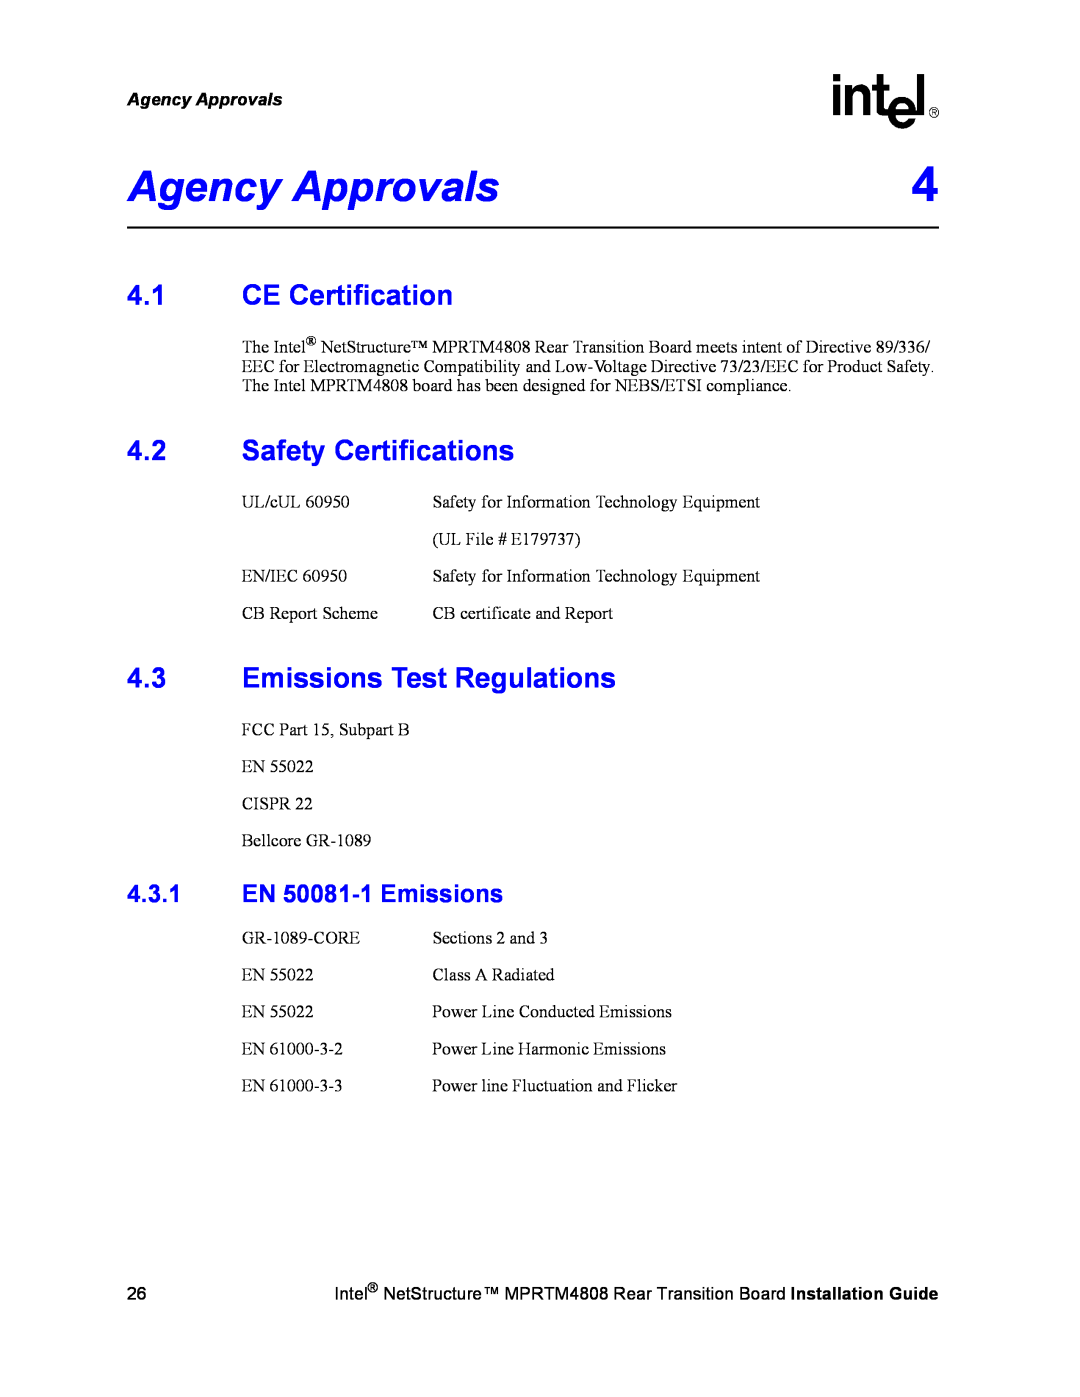 Intel MPRTM4808 manual Agency Approvals, 4.1CE Certification, 4.2Safety Certifications, 4.3Emissions Test Regulations 